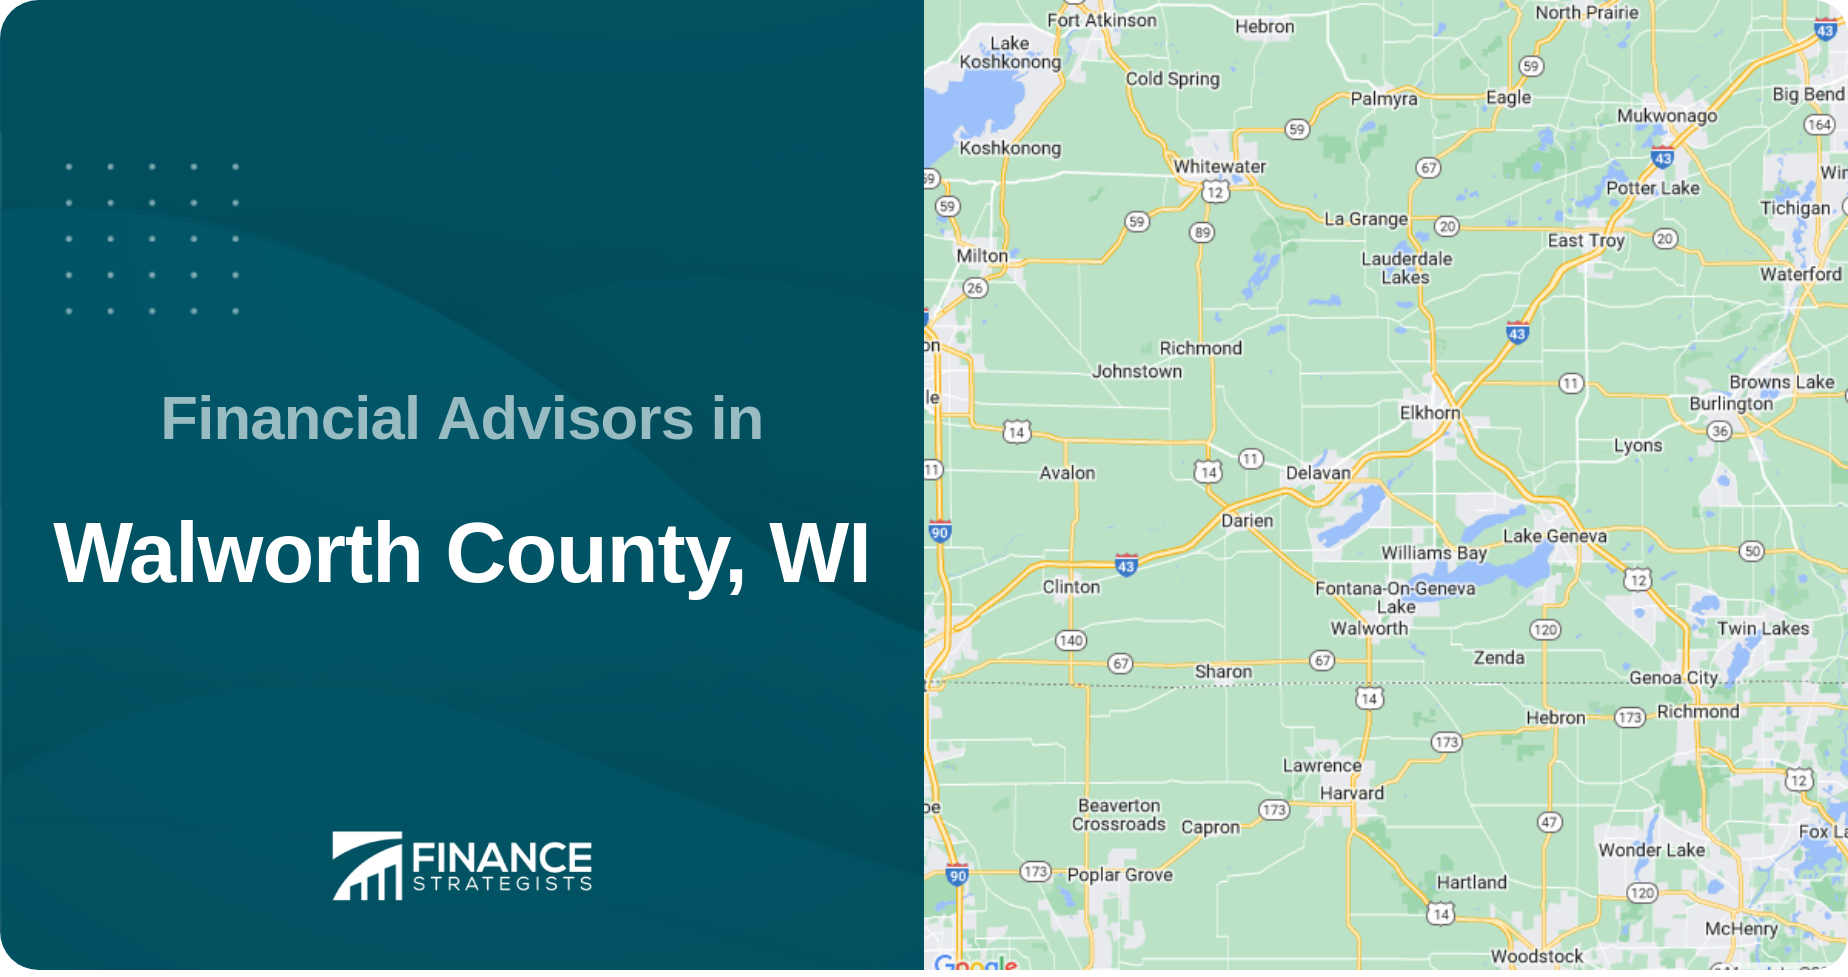 Financial Advisors in Walworth County, WI